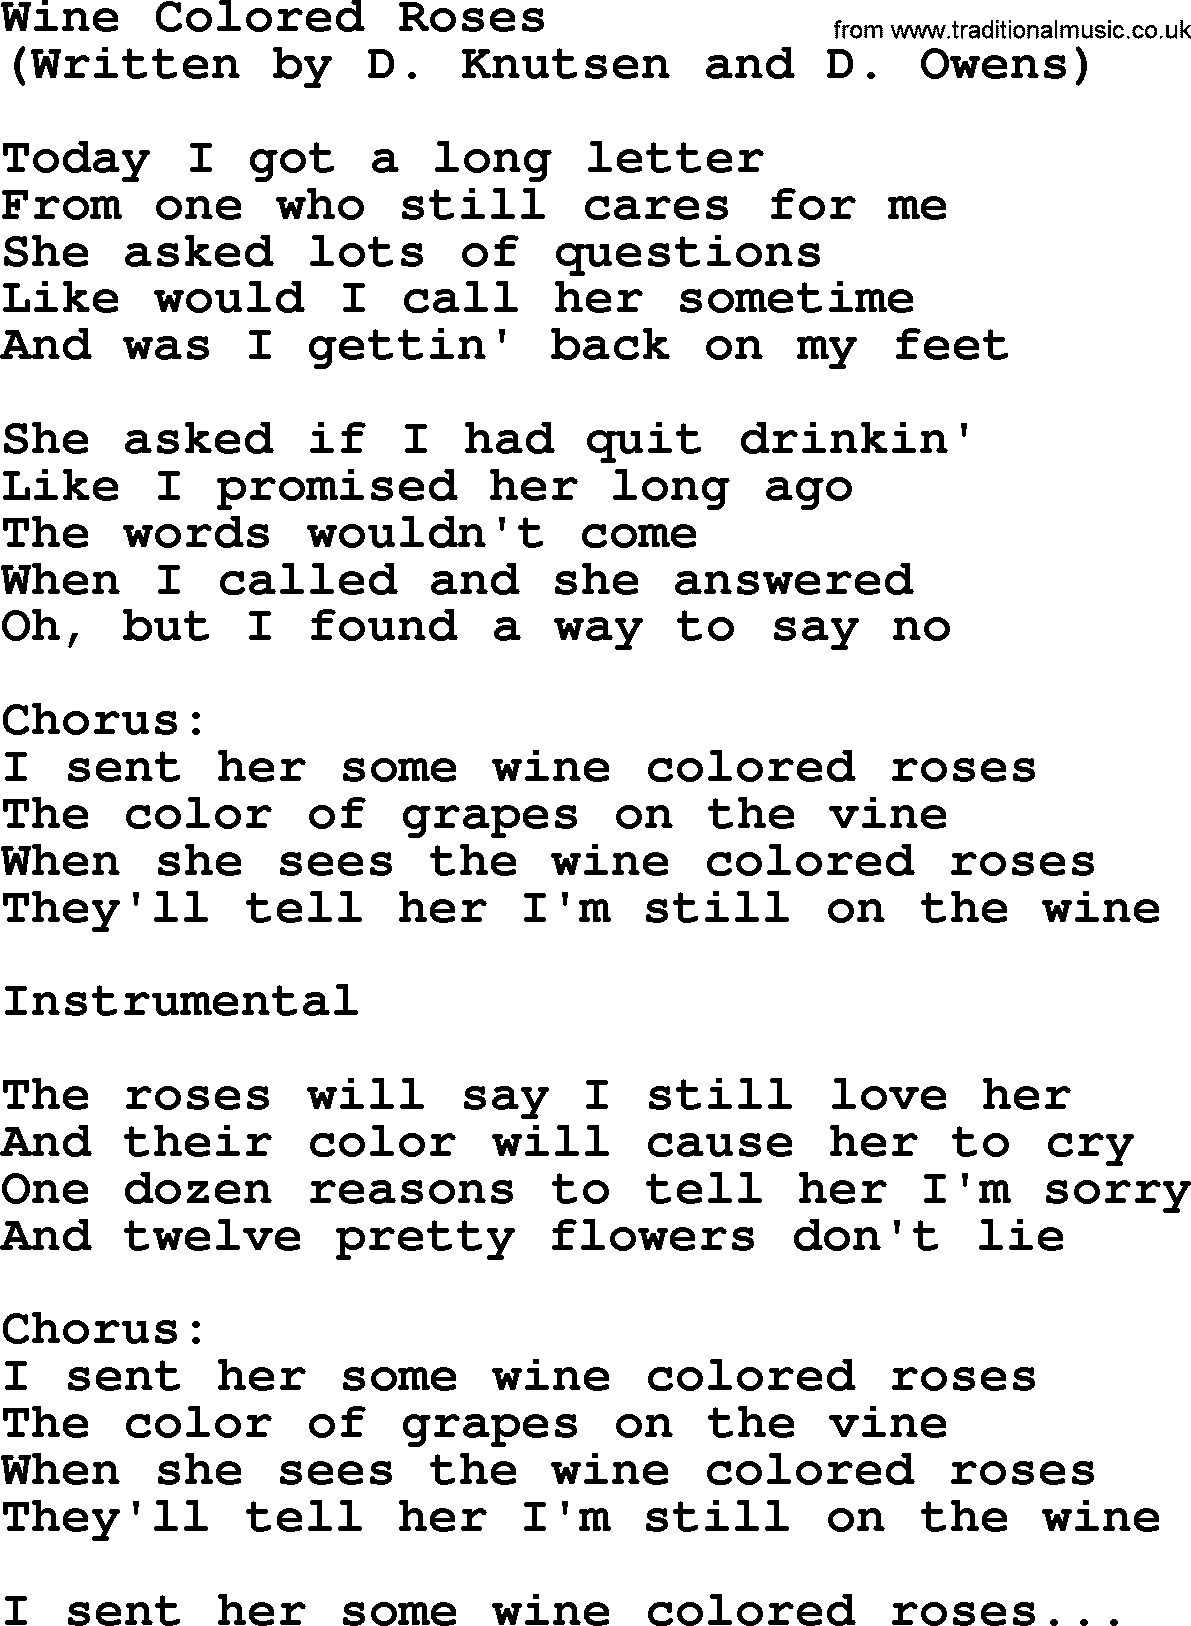 George Jones song: Wine Colored Roses, lyrics